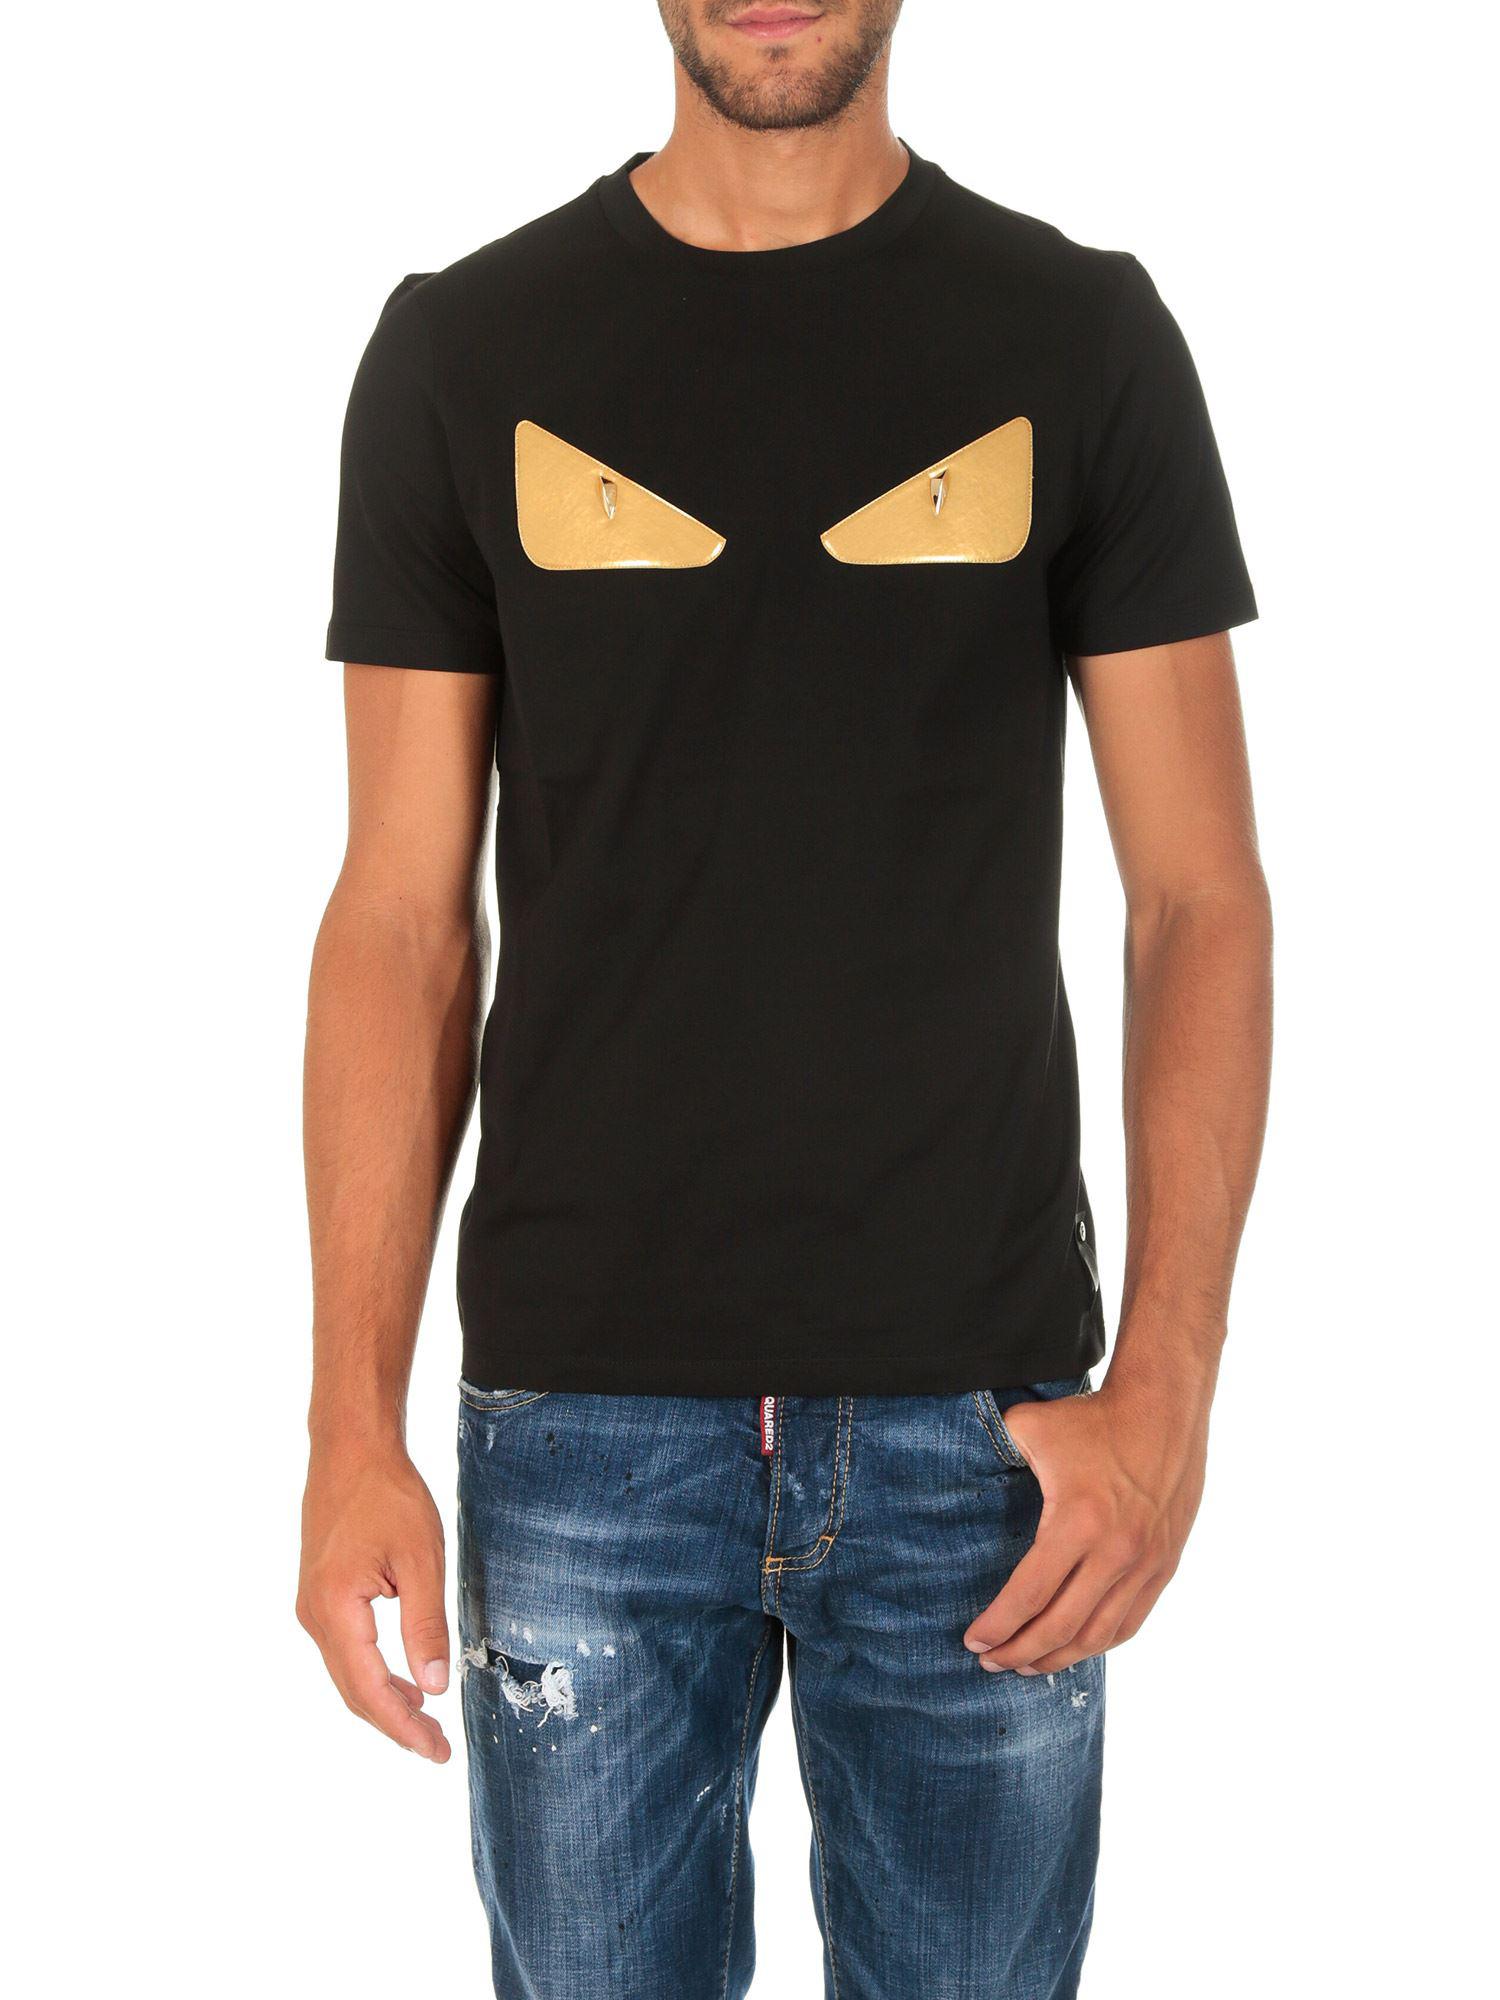 Lyst - Fendi T-shirt T-shirt in Black for Men - Save 56.4%